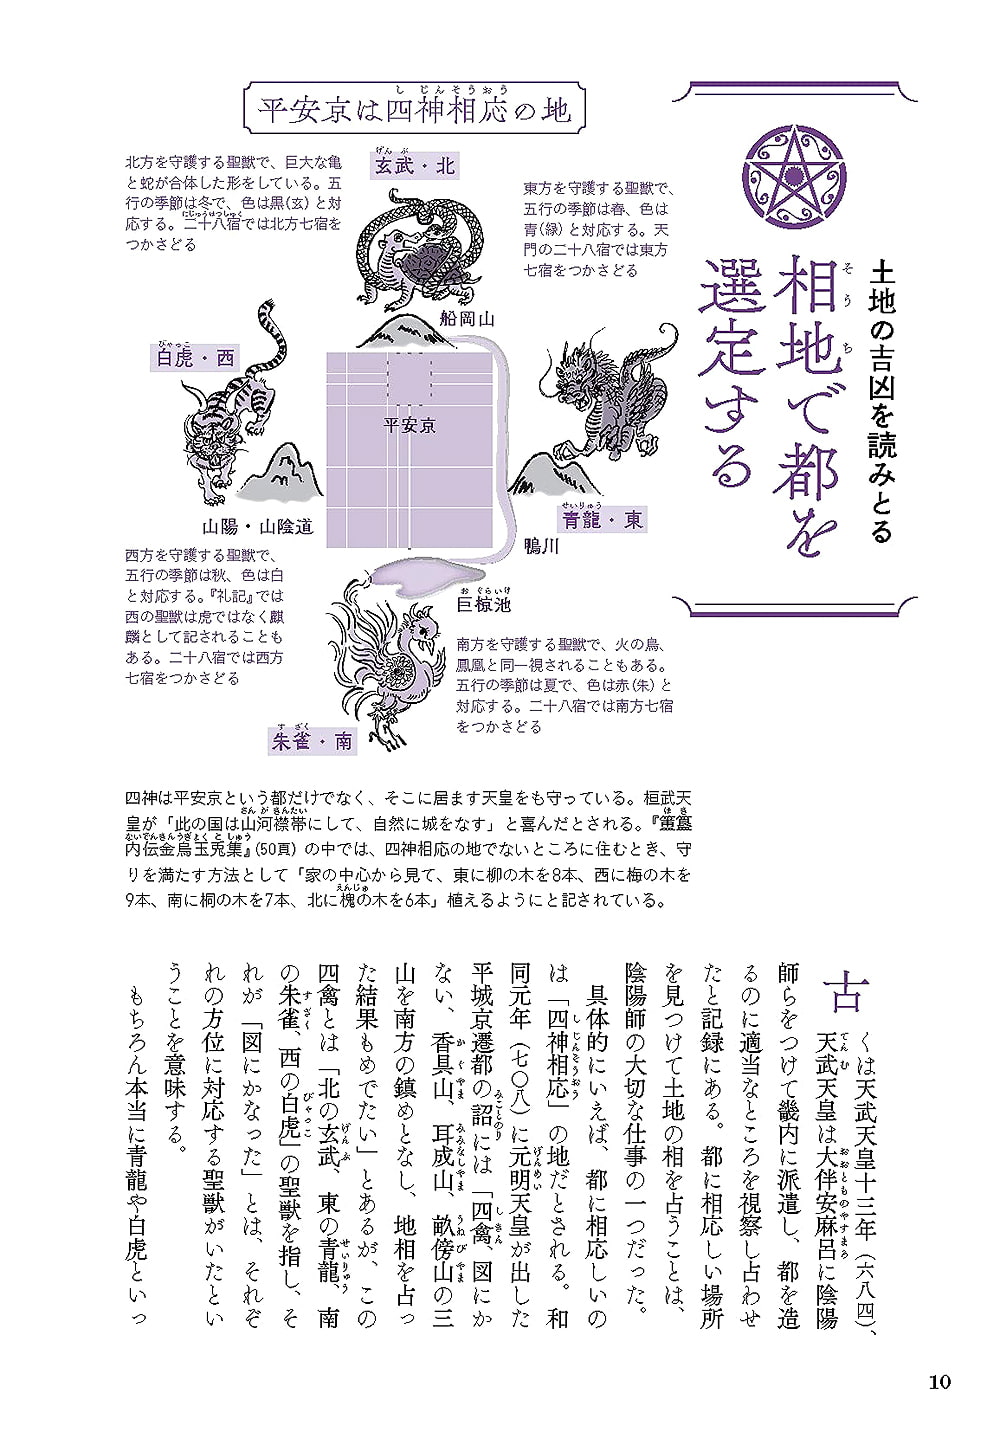 Book　Anatomy　の通販　陰陽師の解剖図鑑　Onmyoji's